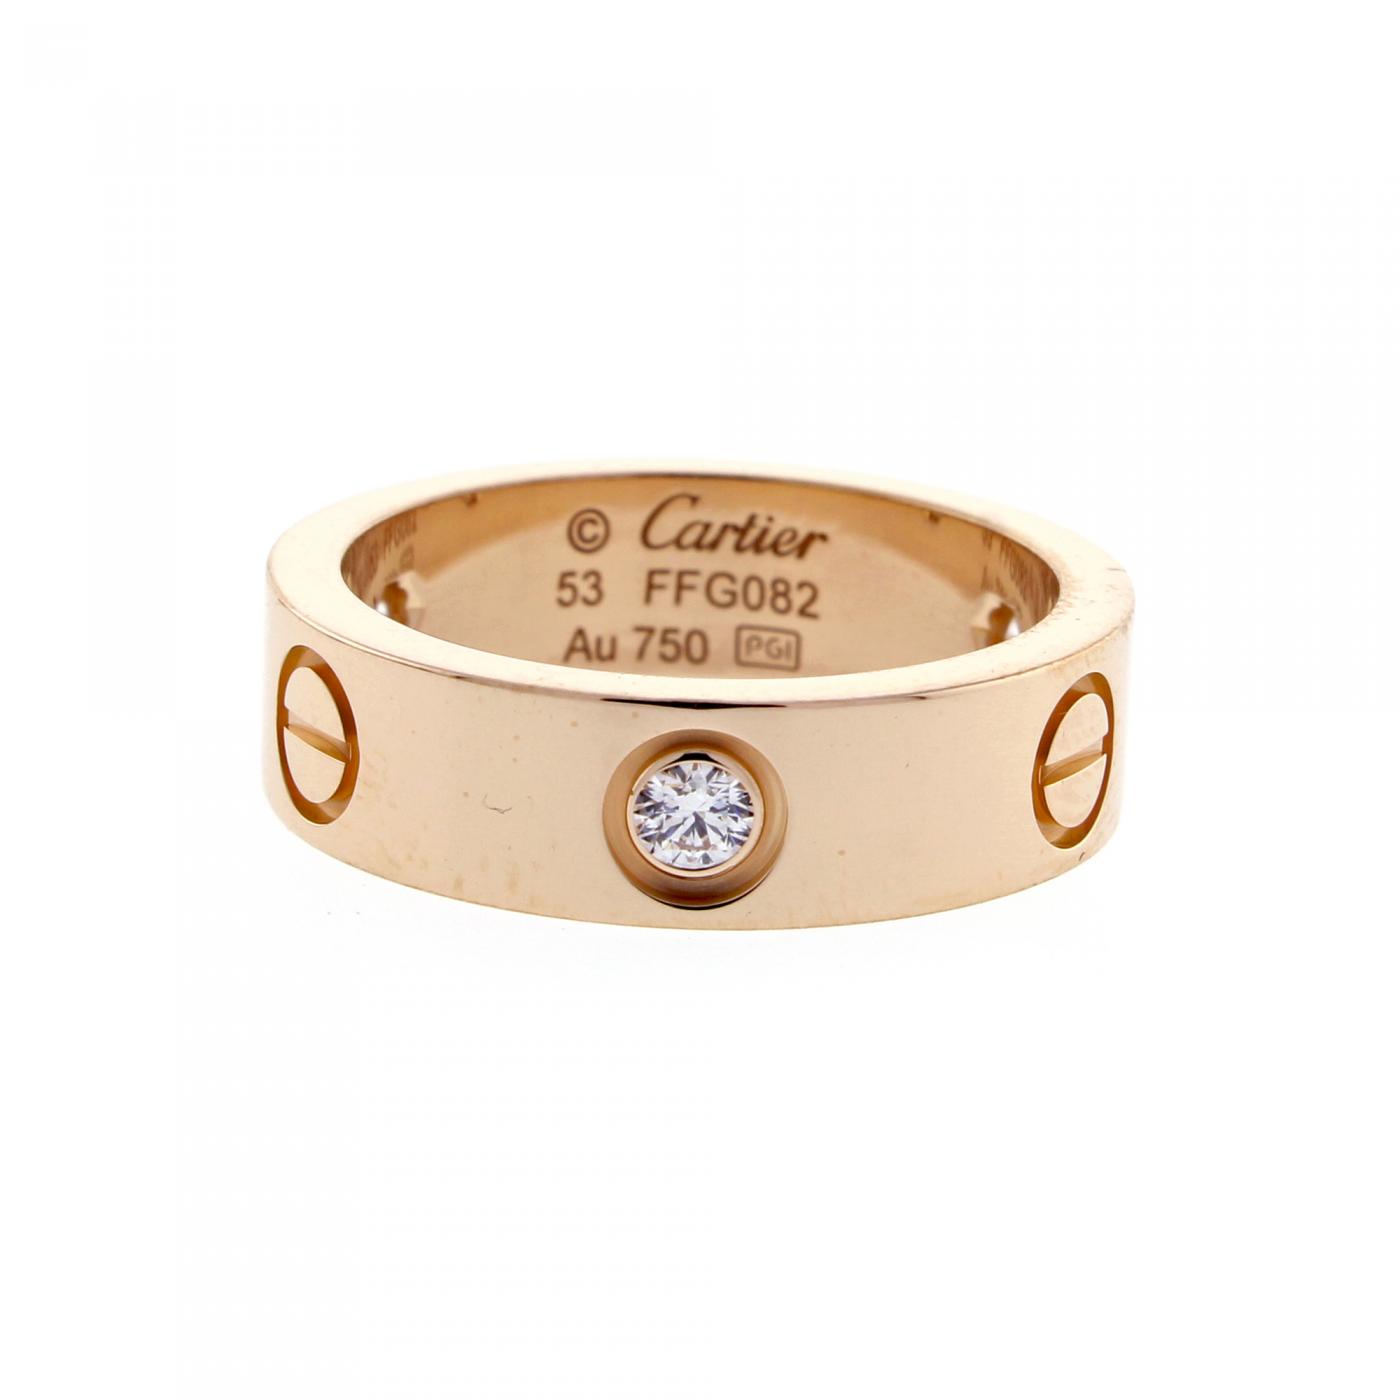 cartier love ring 3 diamond rose gold